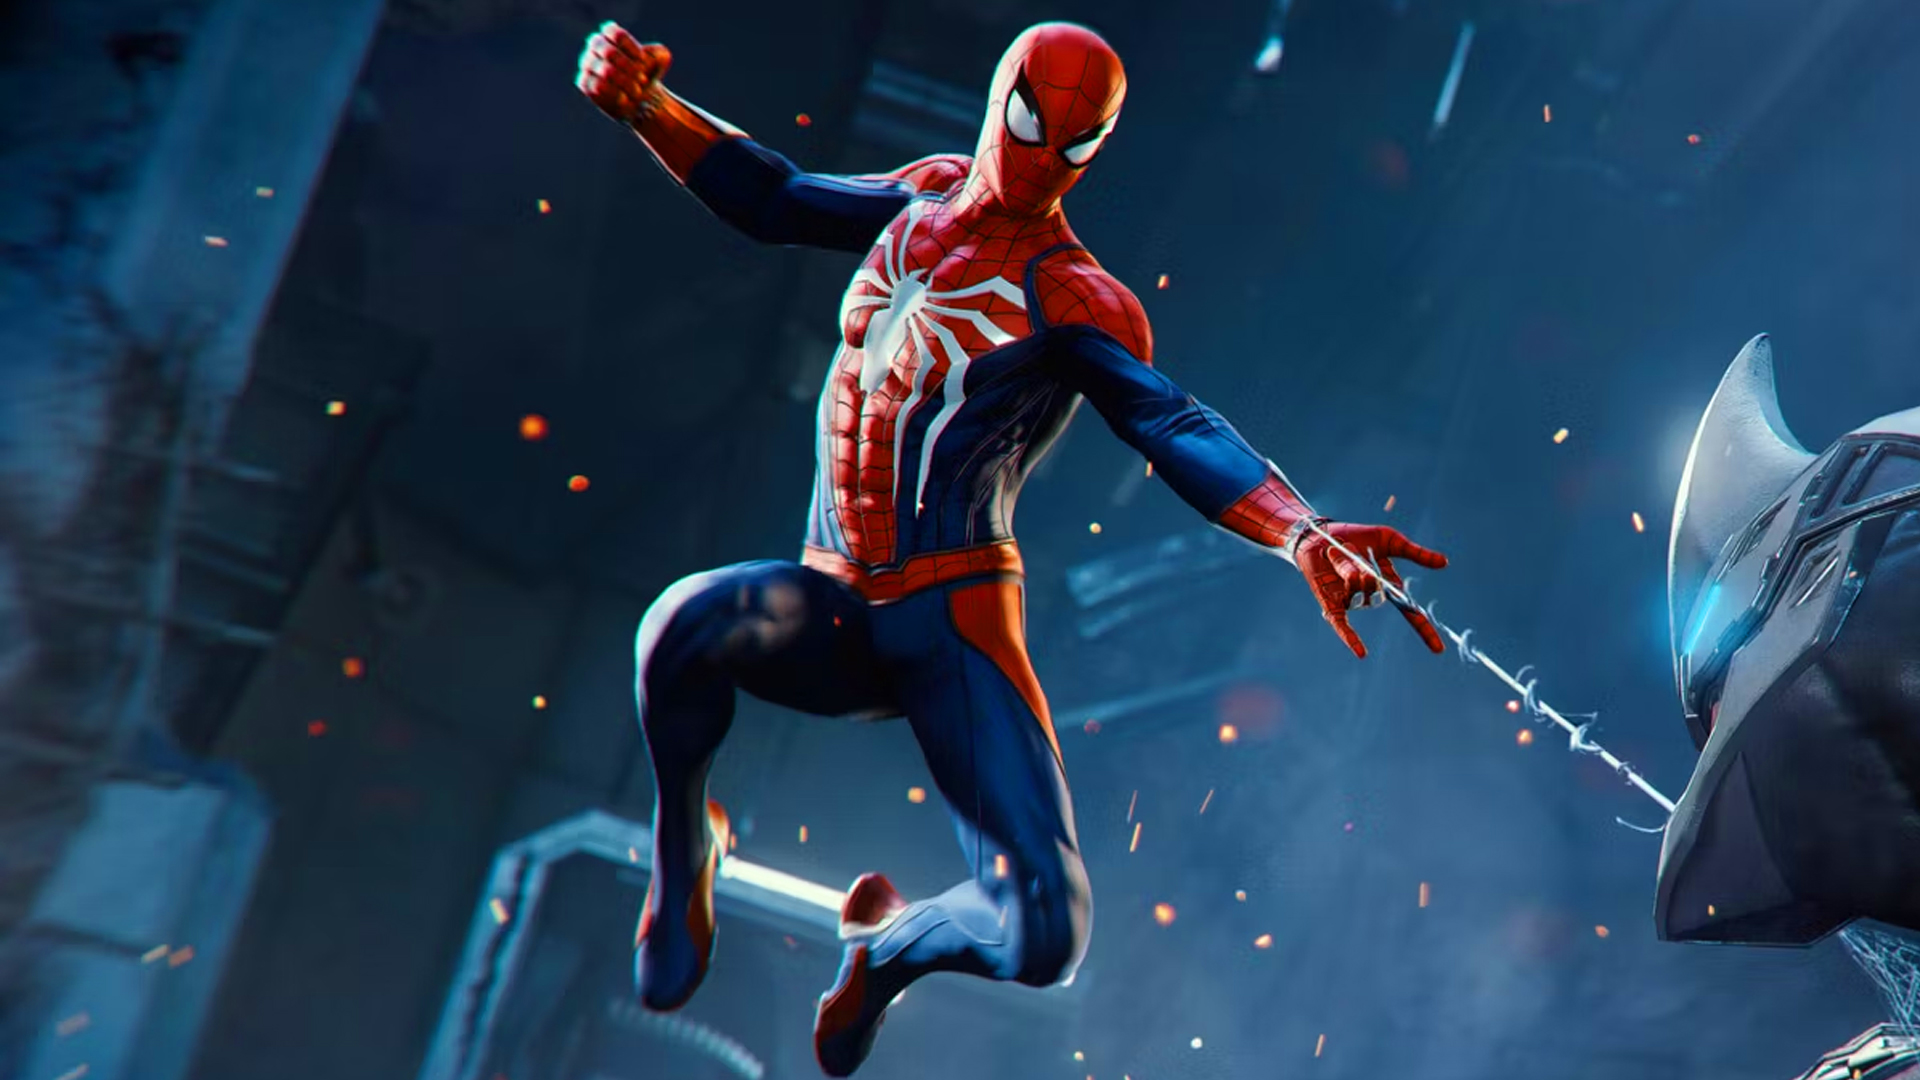 Marvel's Spider-Man 2 September release date leaked